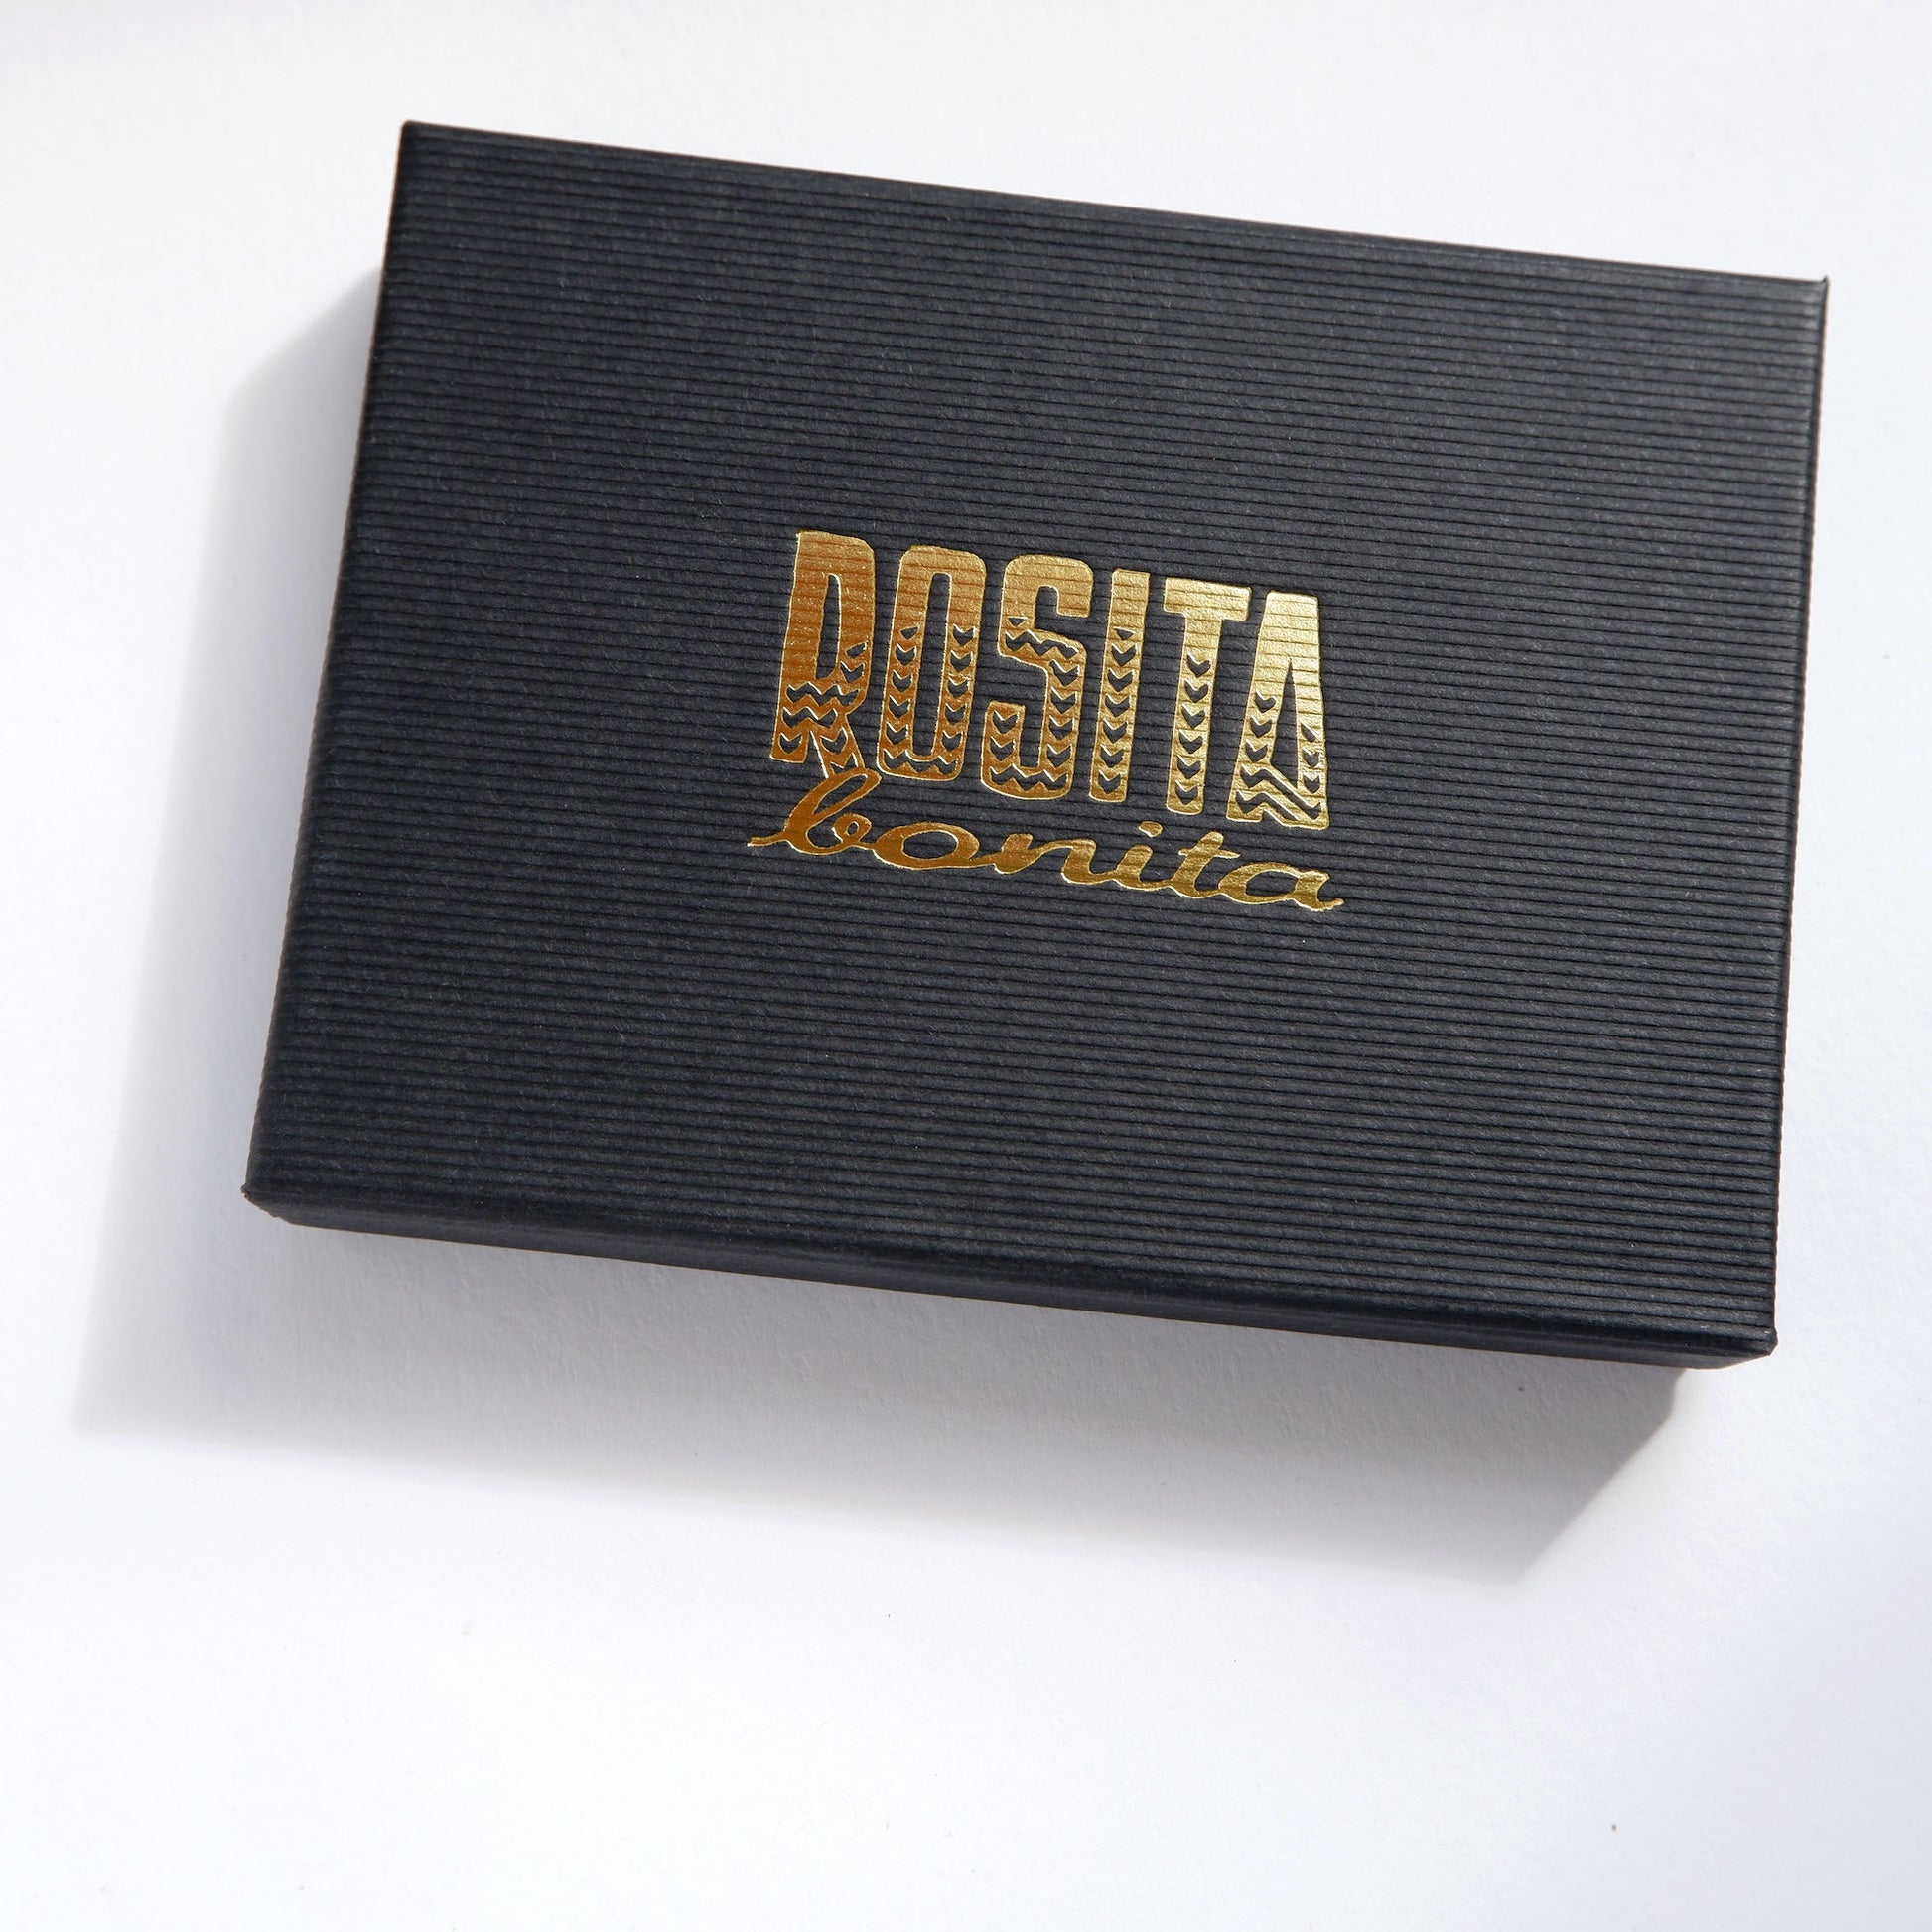 black ift box with rosita bonita logo in gold